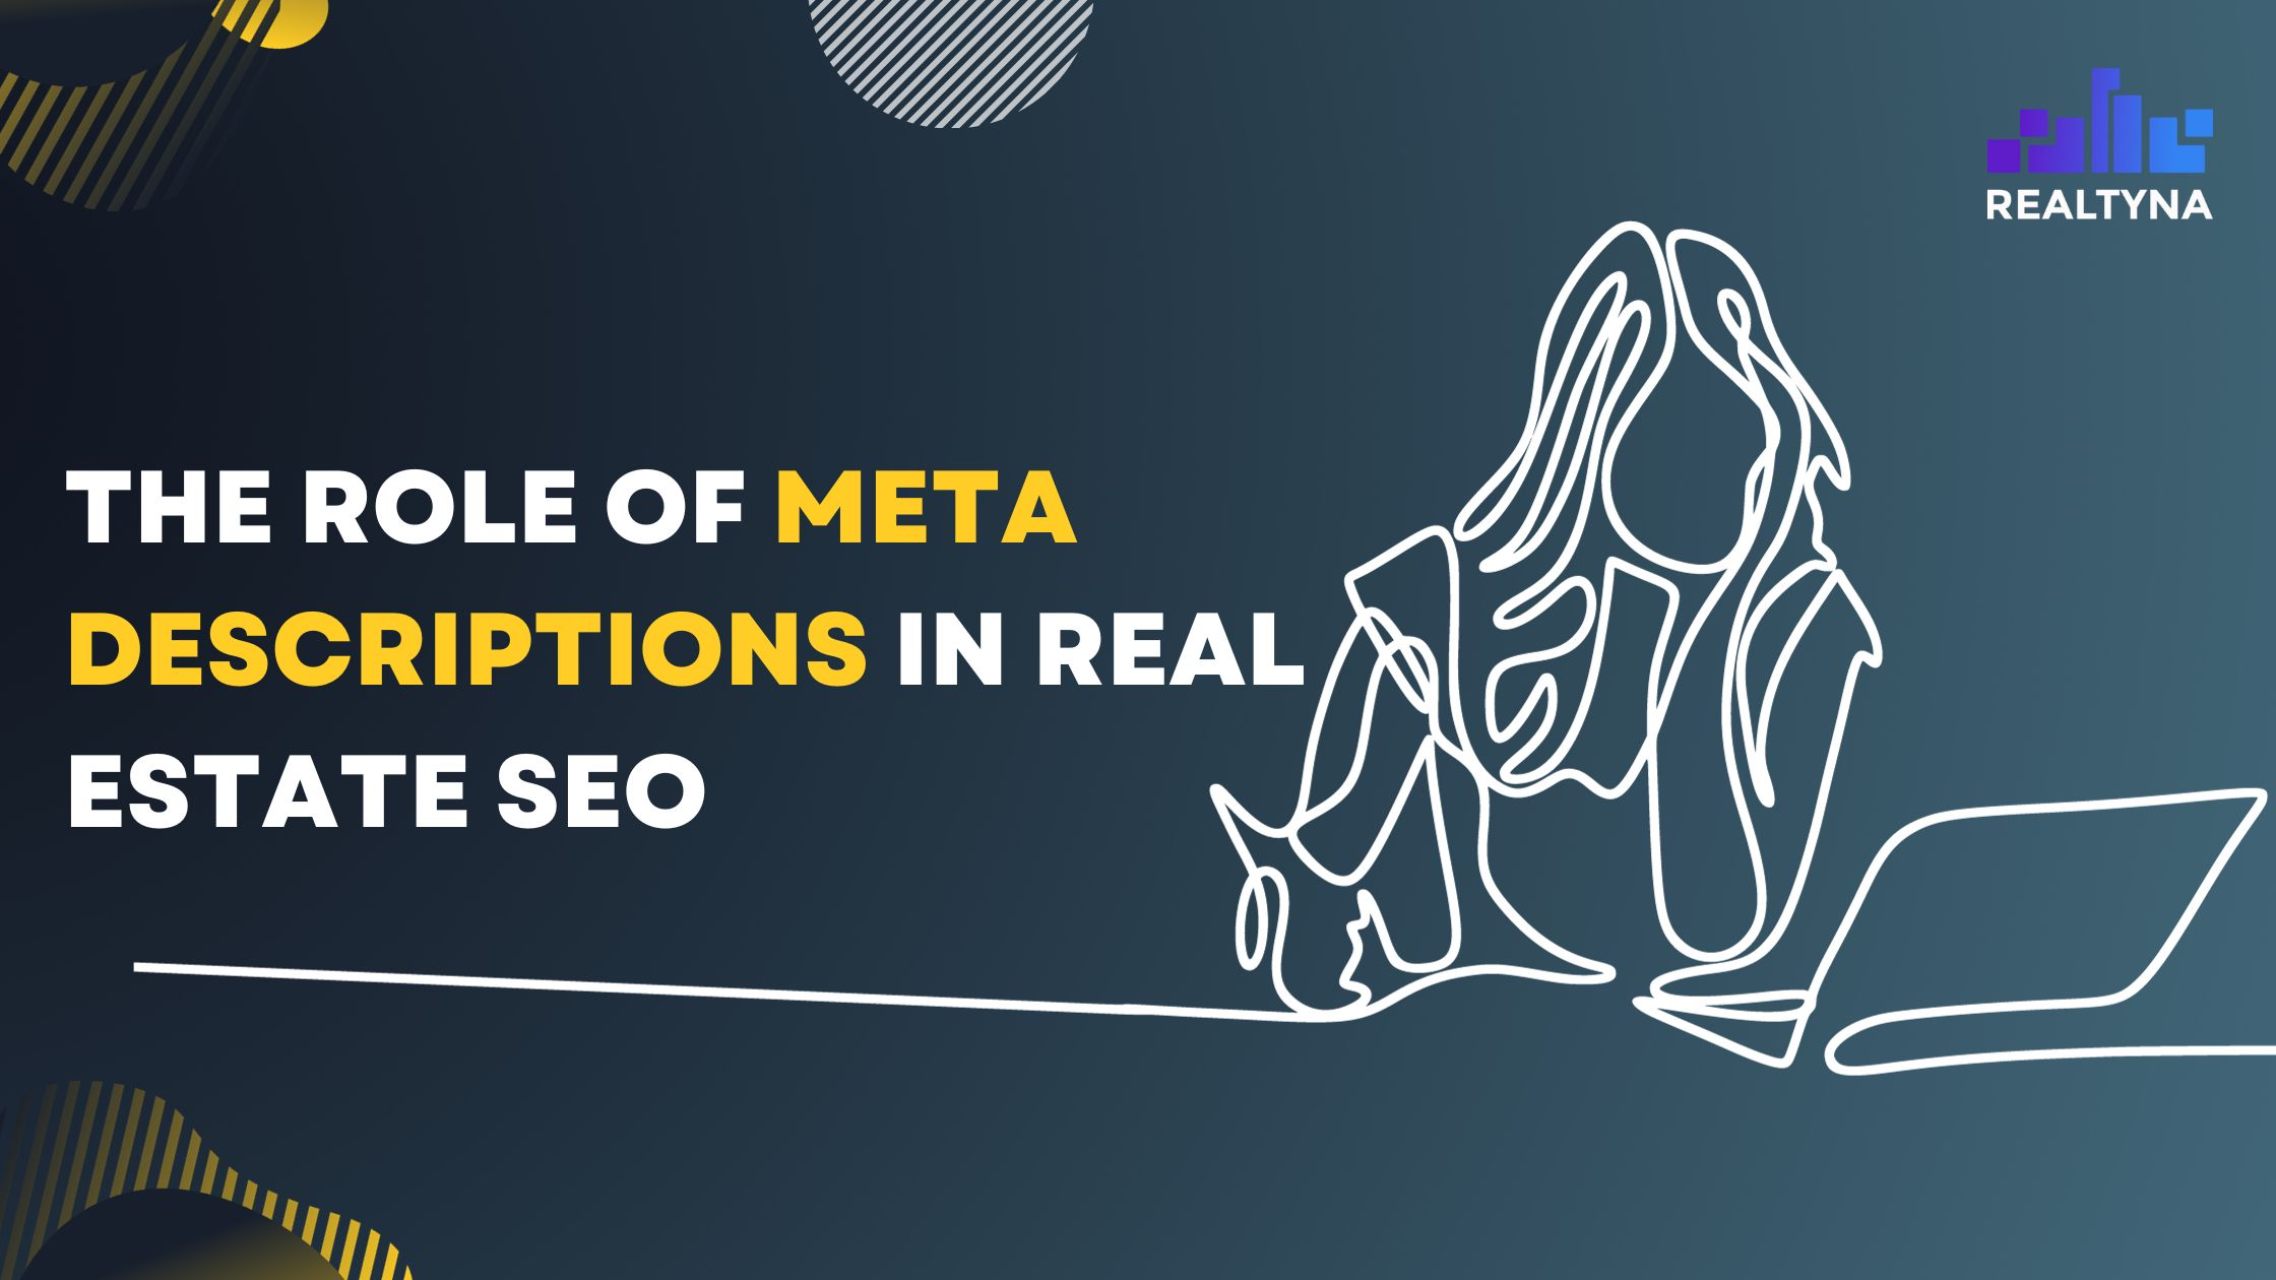 The role of meta descriptions in real estate SEO